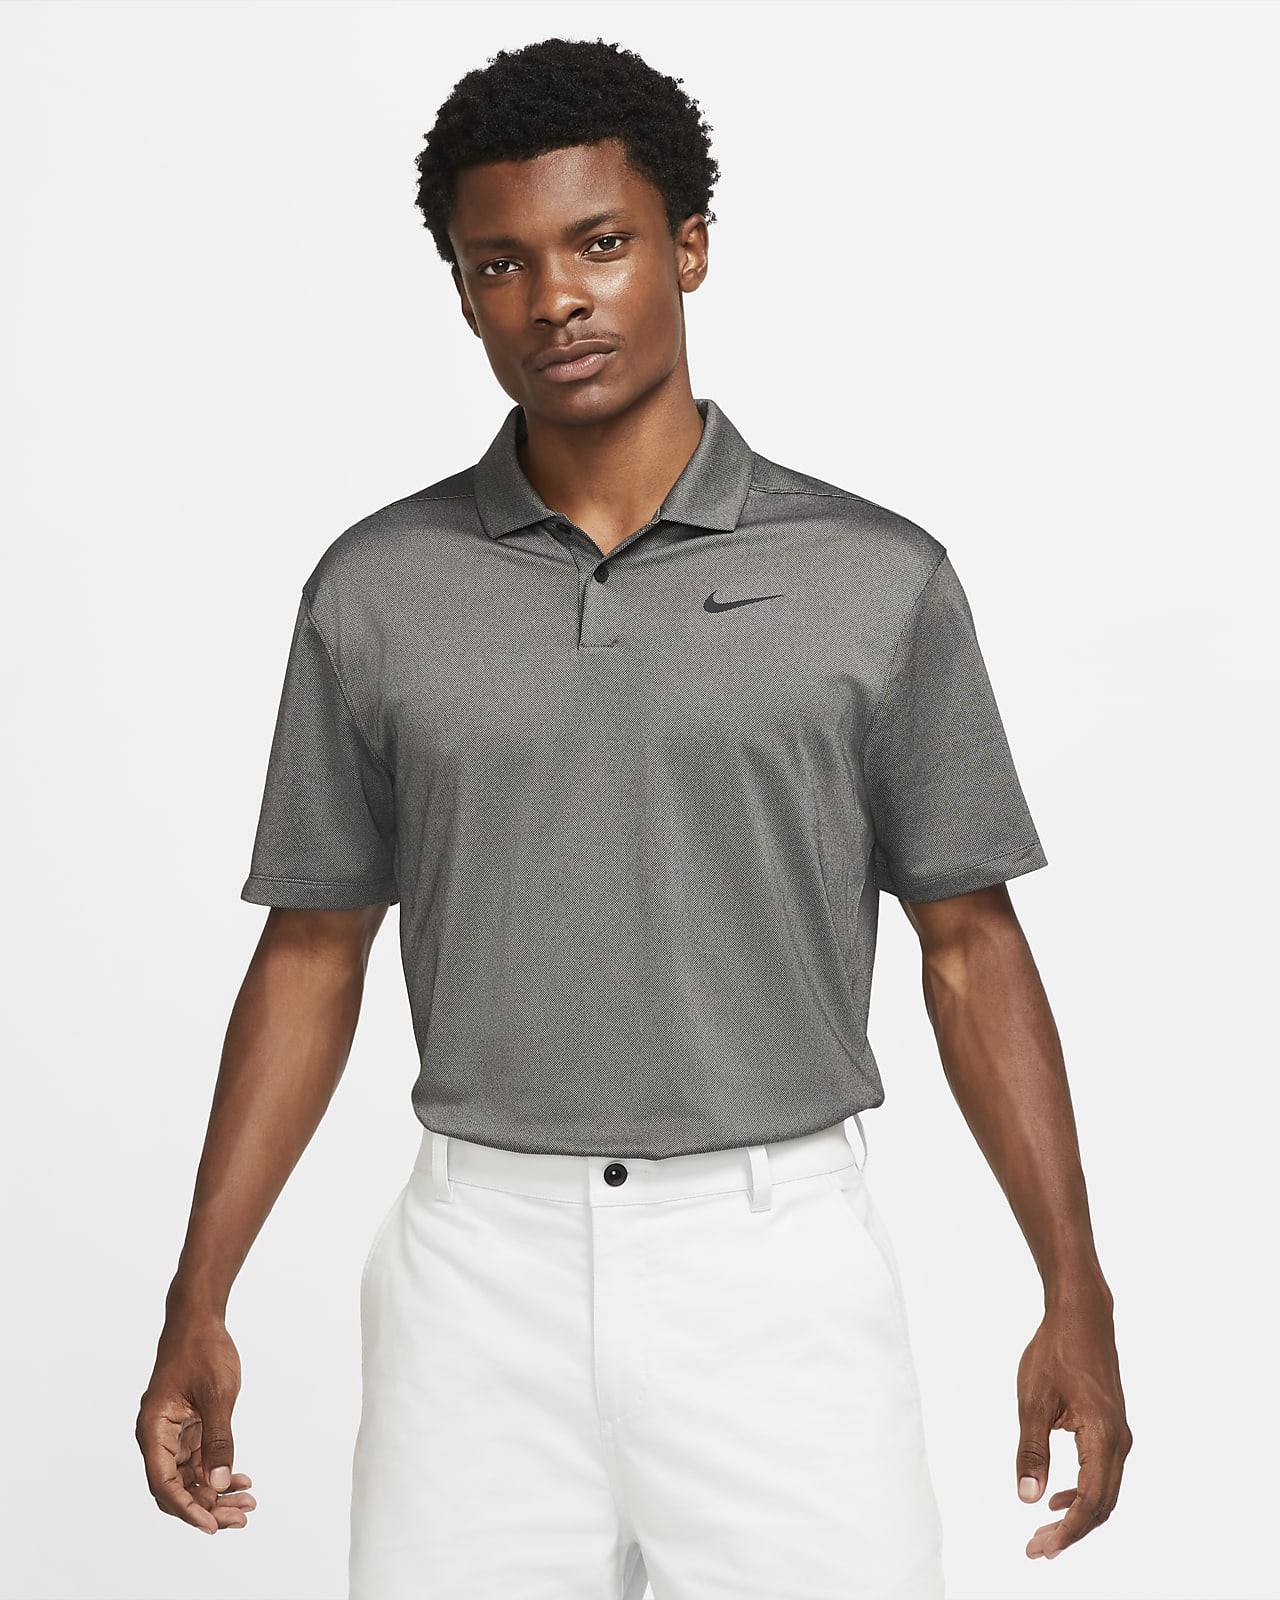 nike men's golf polo shirts